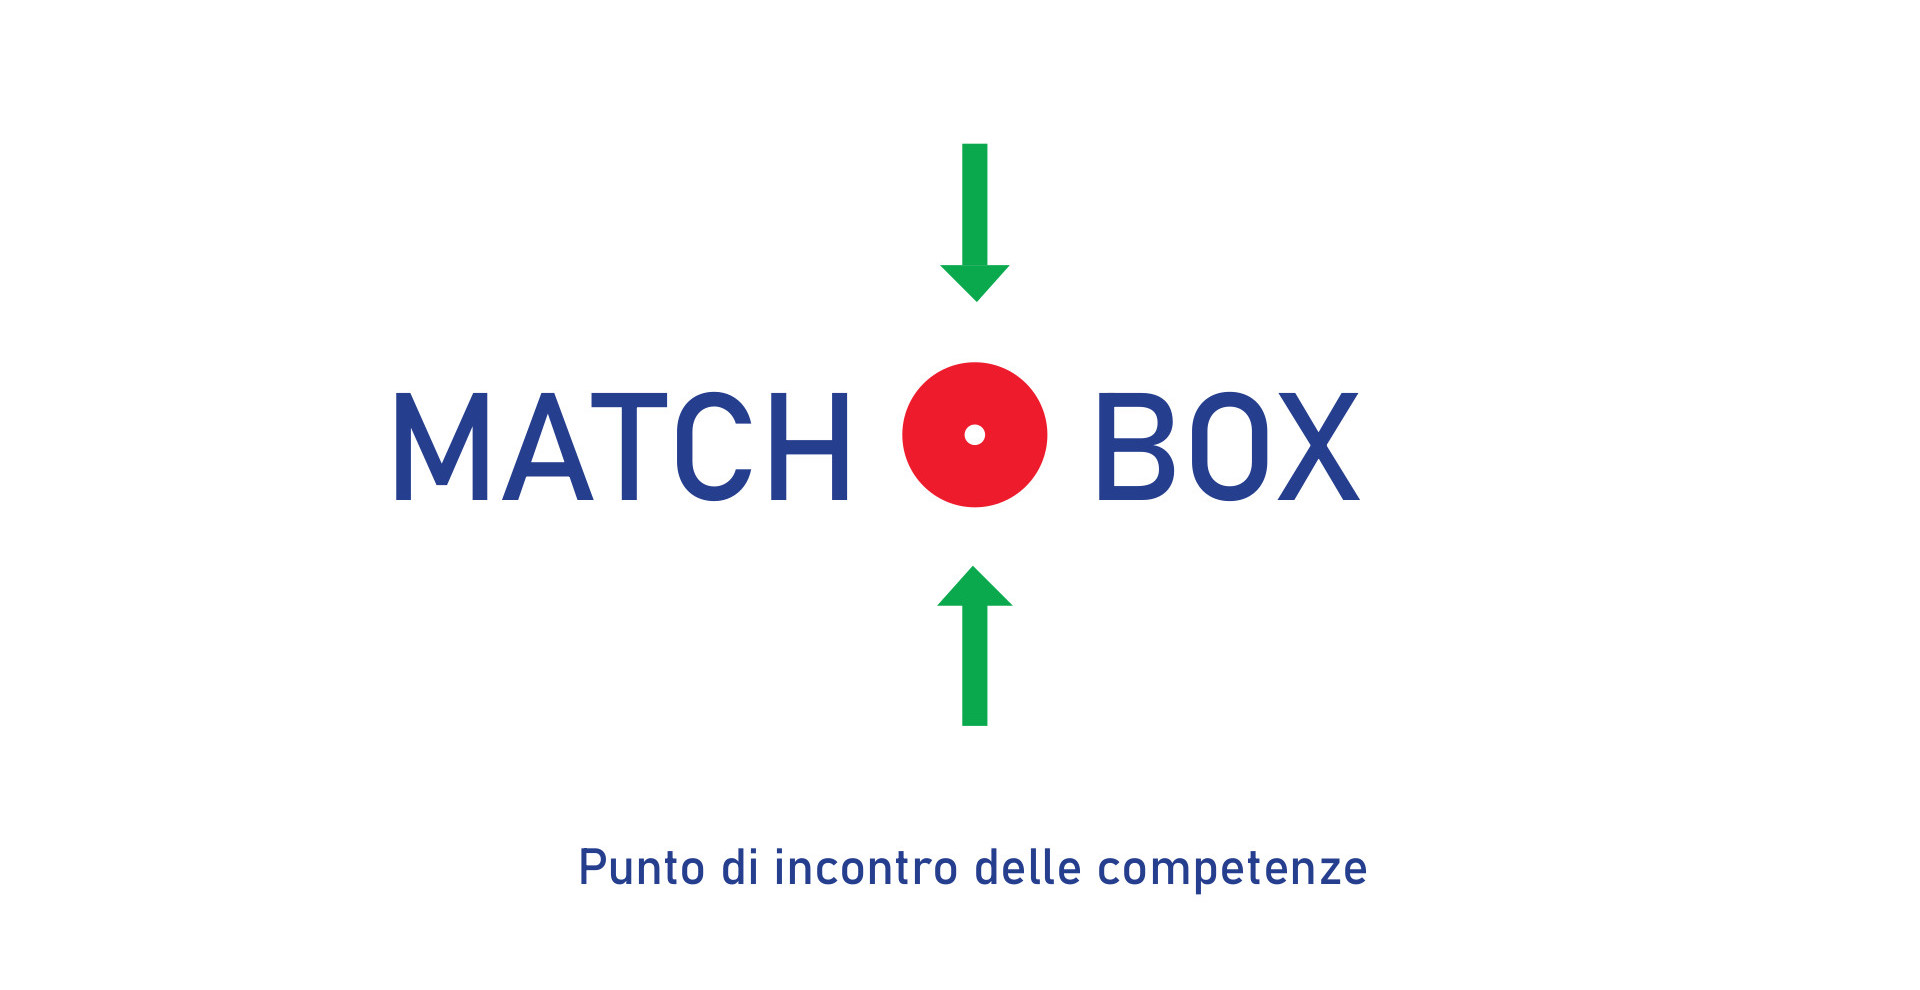 coworking-matchbox